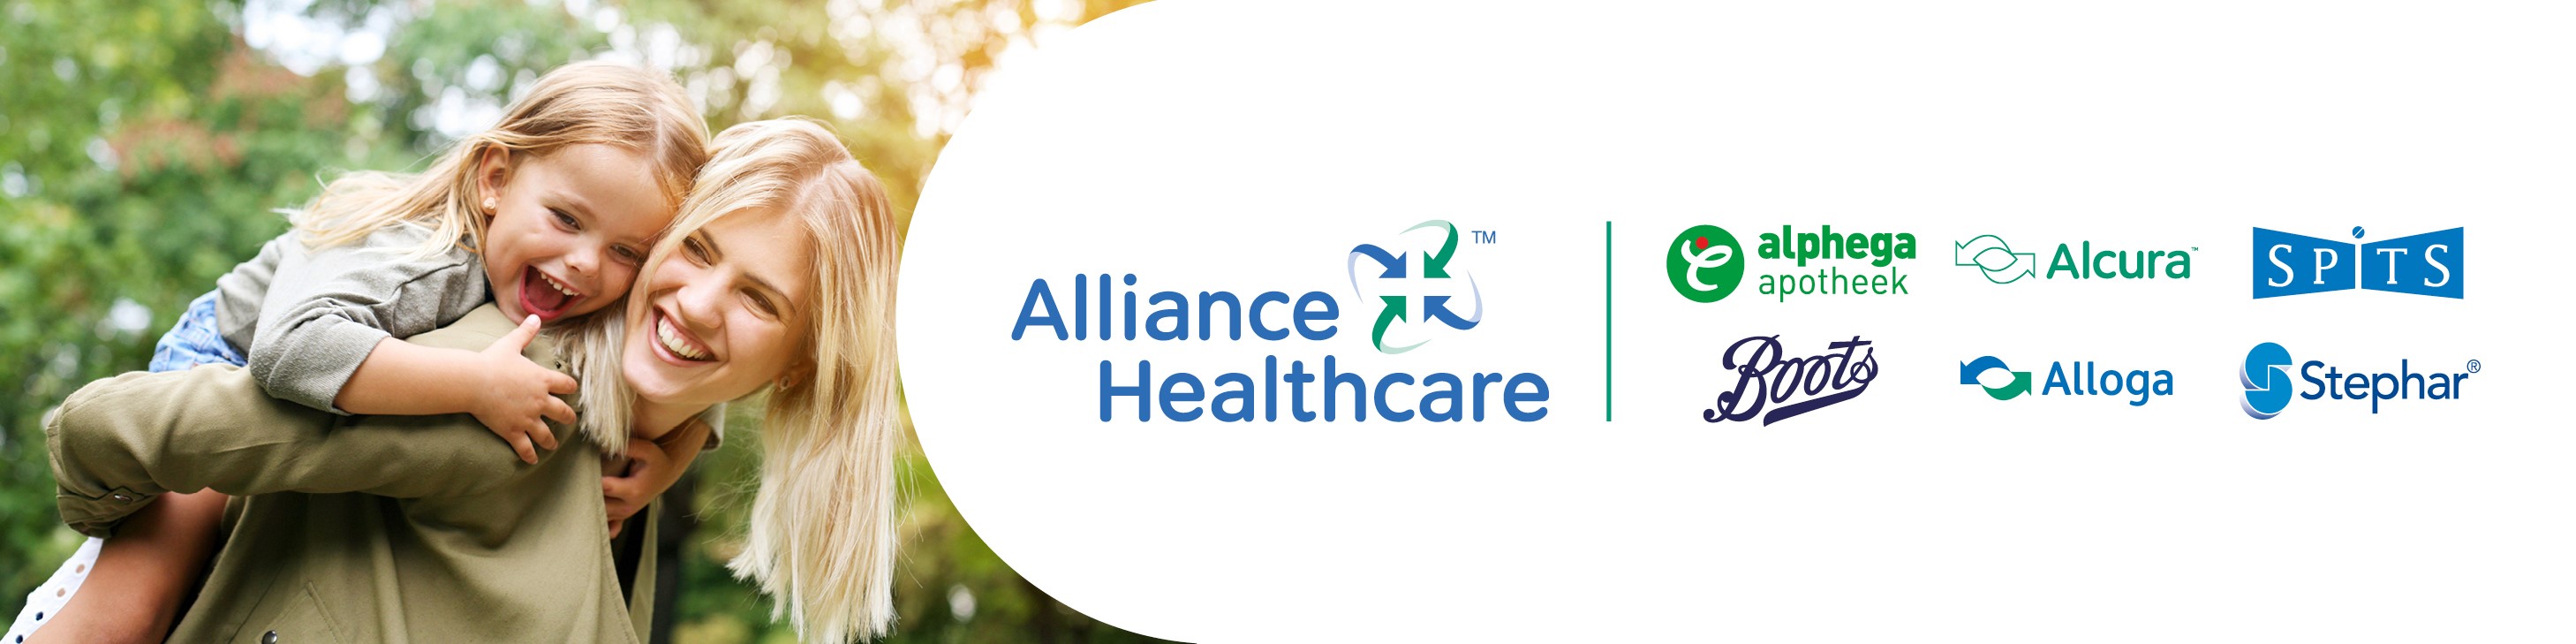 Corporate banner Alliance Healthcare Nederland